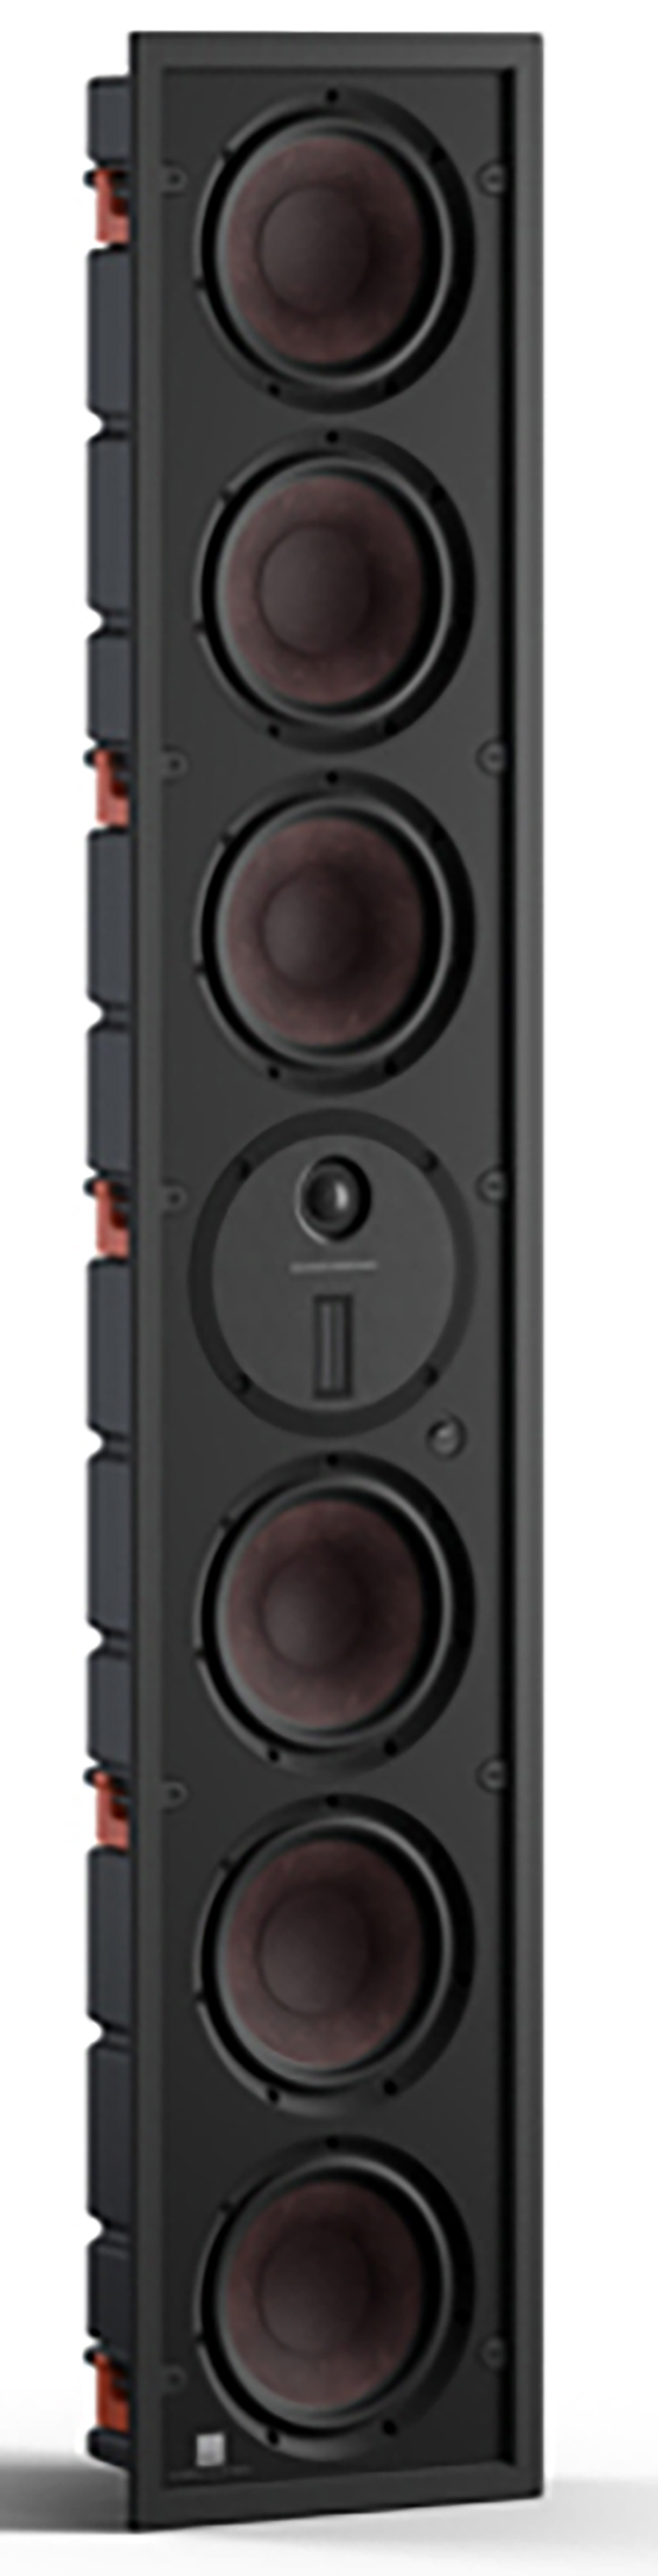 DALI PHANTOM M-675 Custom Installation Speaker